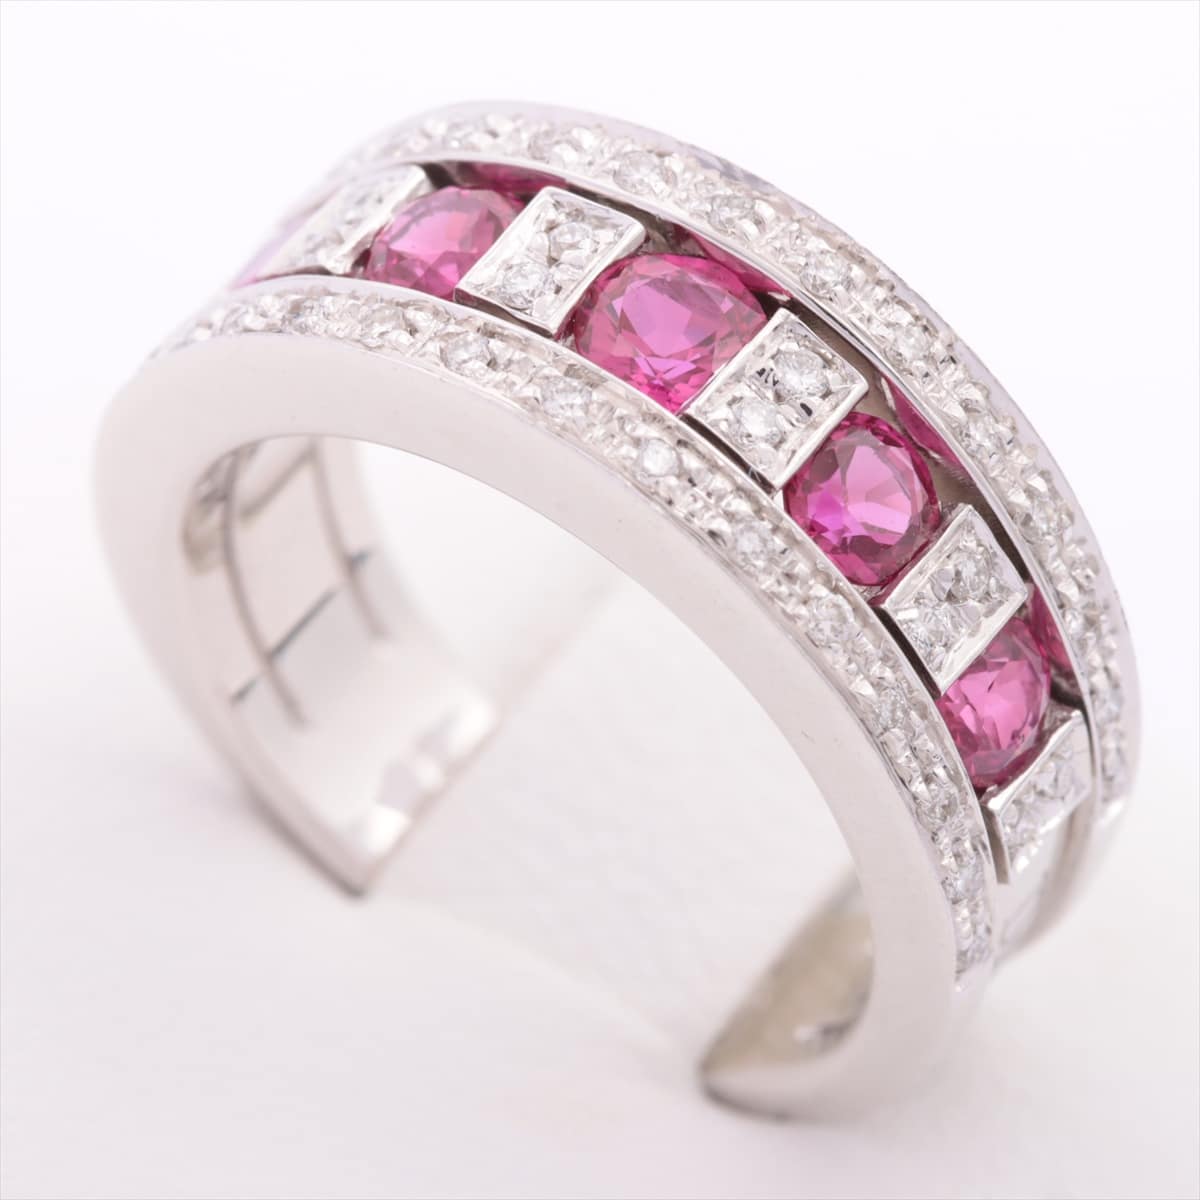 Damiani Belle Époque Ruby diamond rings 750(WG) 7.2g